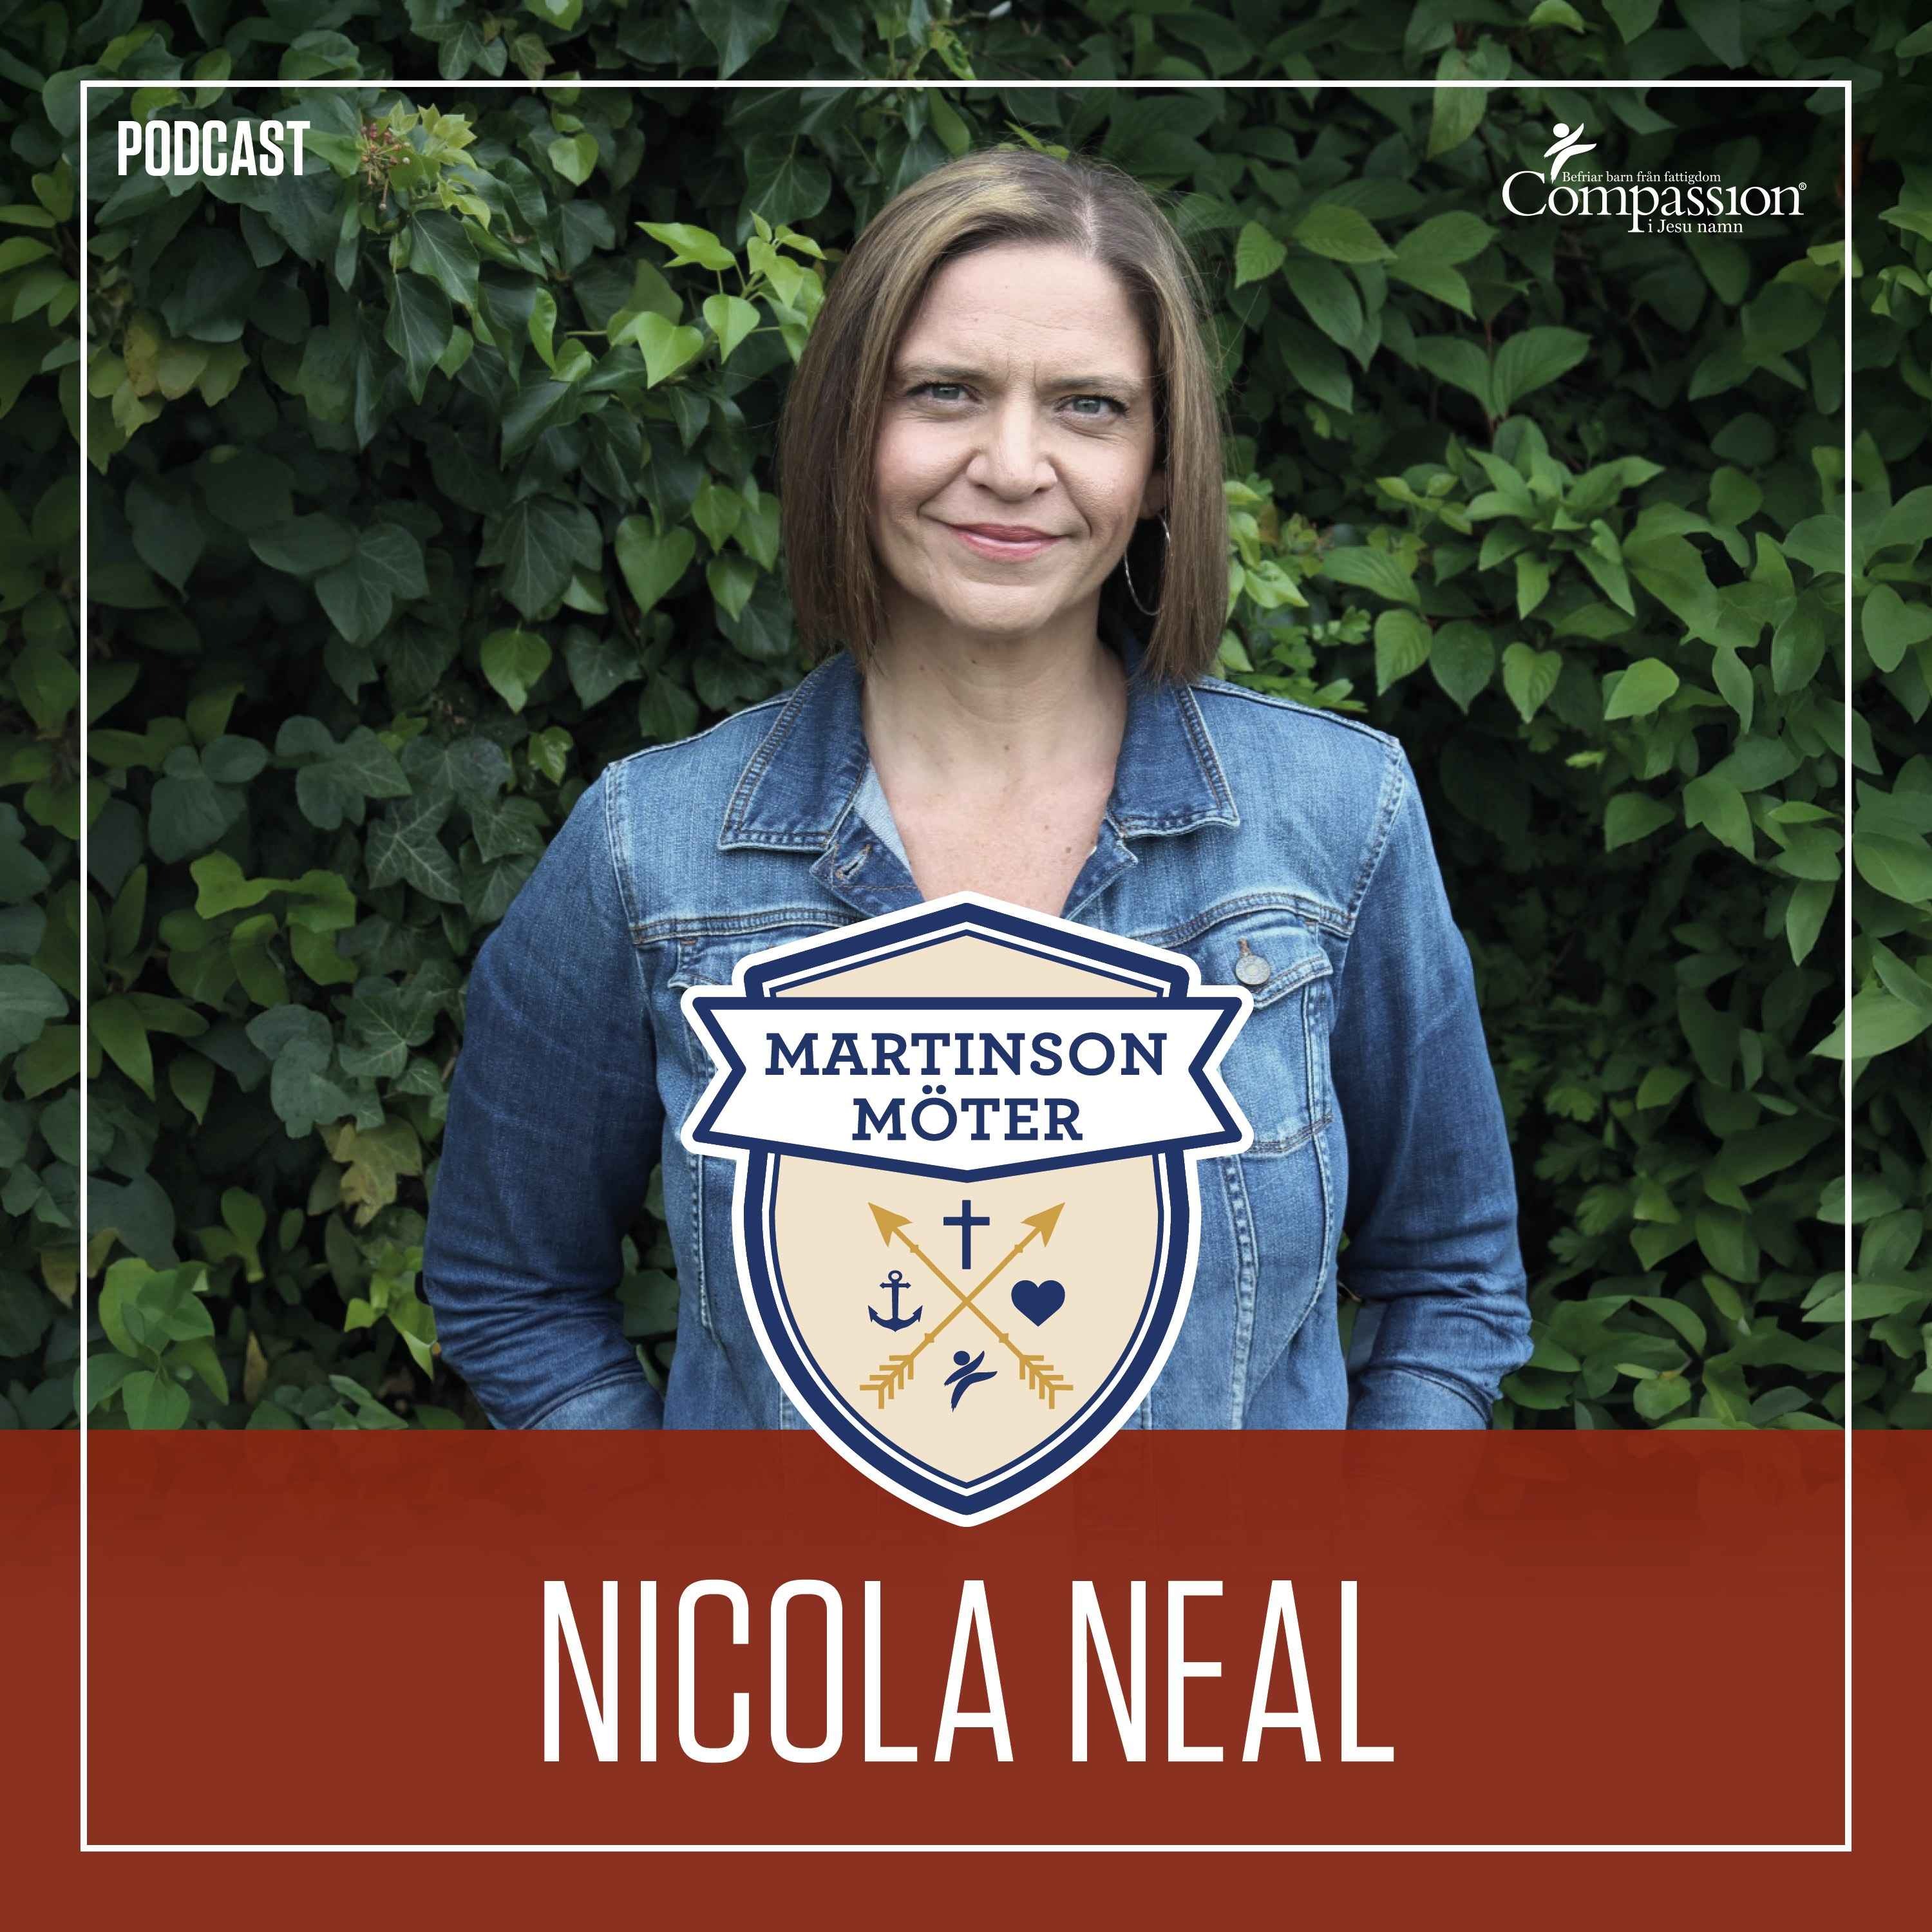 Nicola Neal